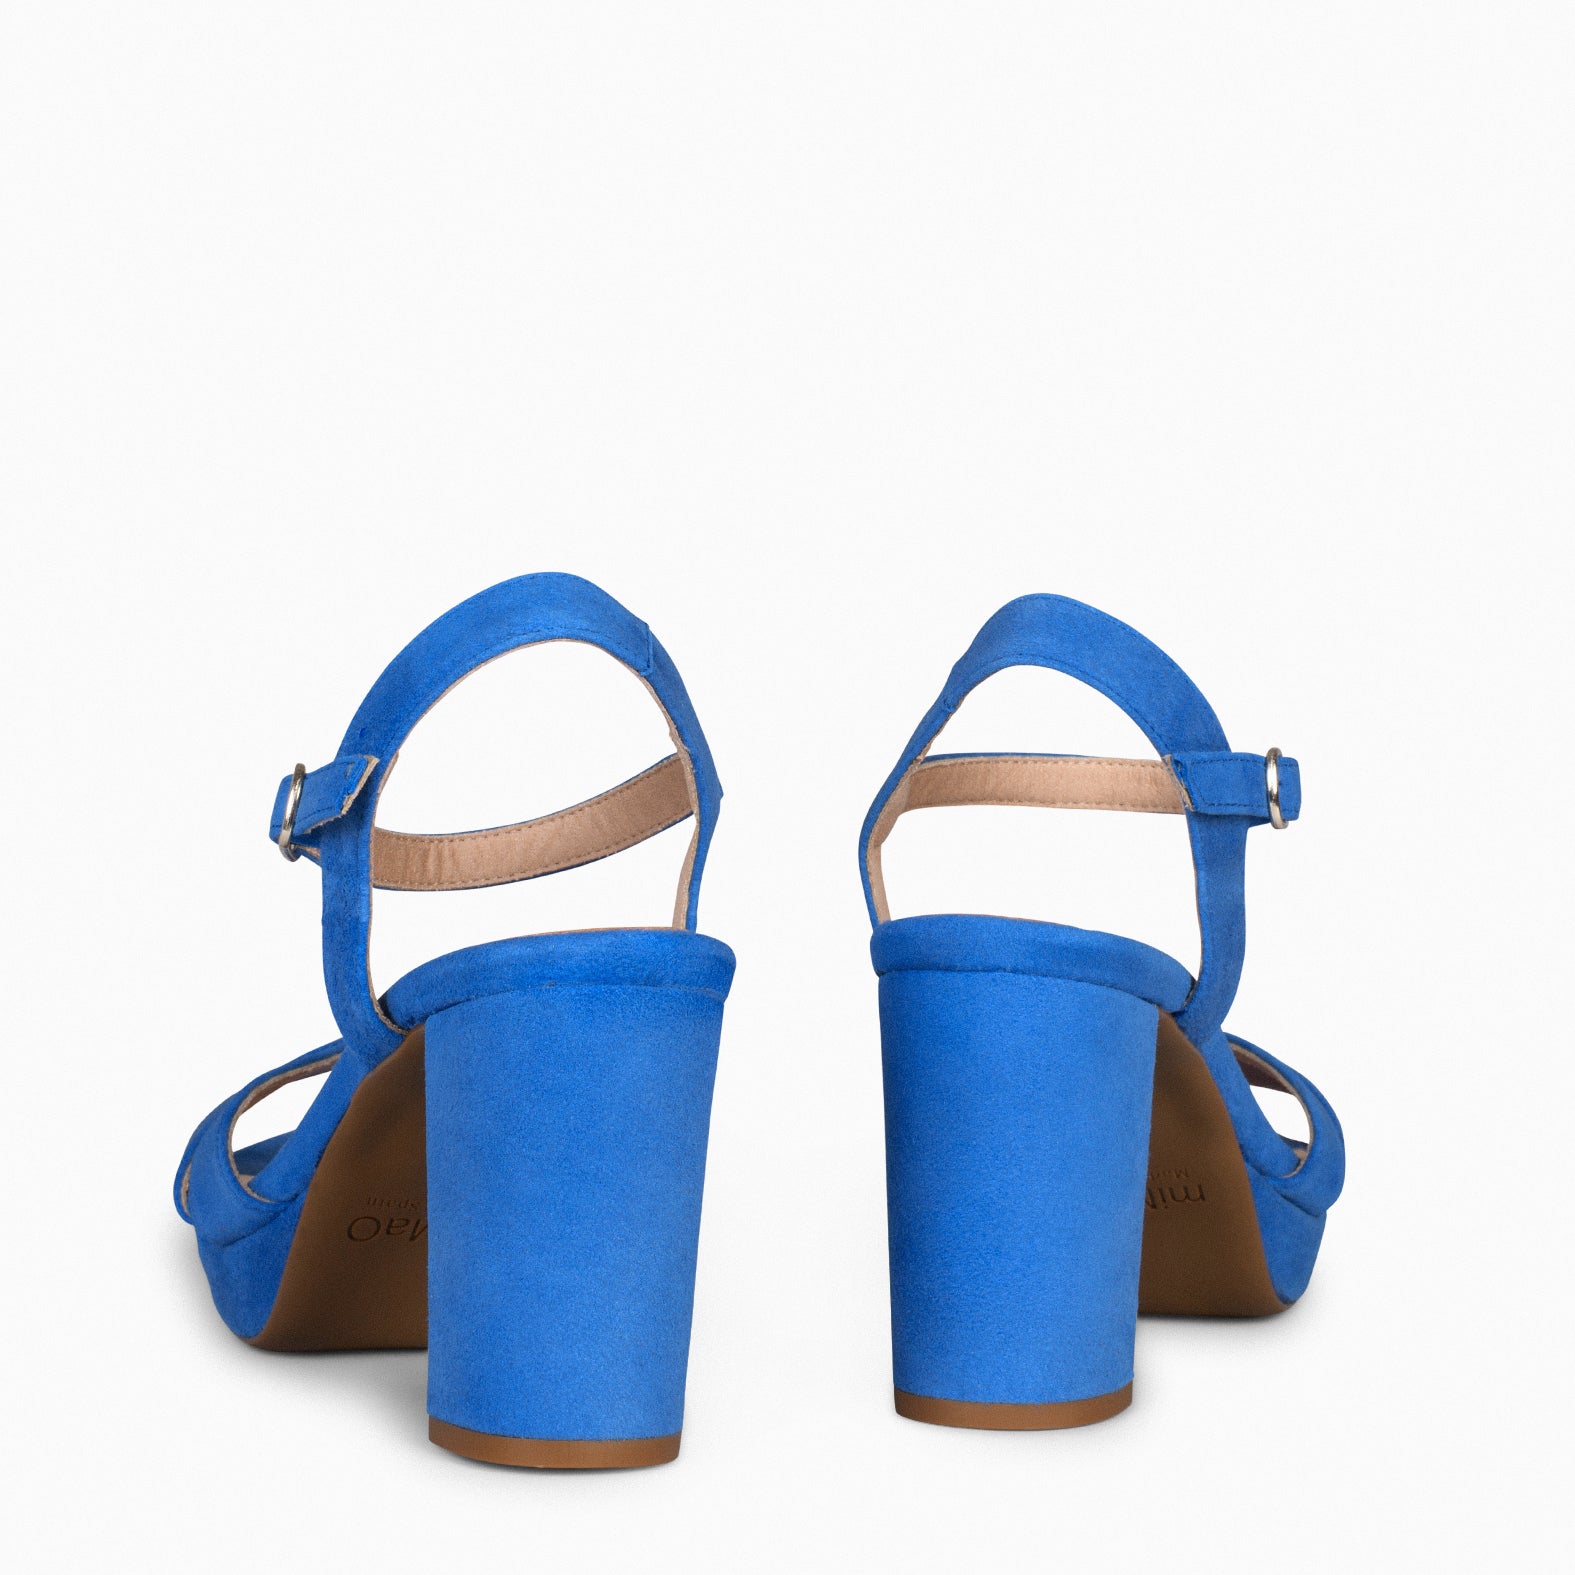 PARIS – BLUE high heel sandal with platform